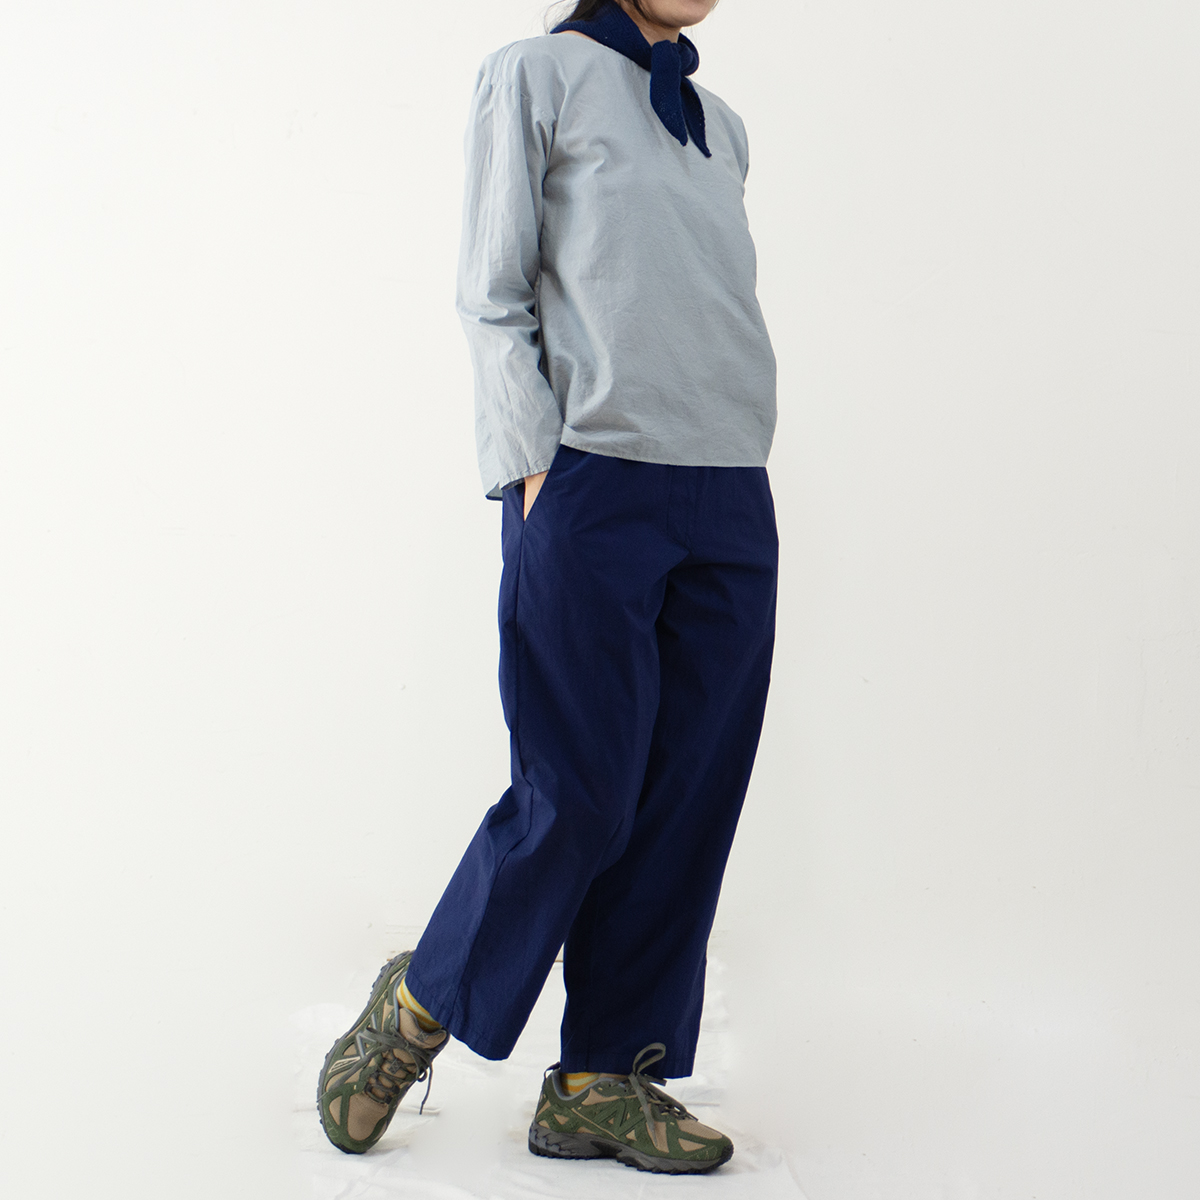 Manuelle Guibal Worker Pants Crino ( imperial blue)